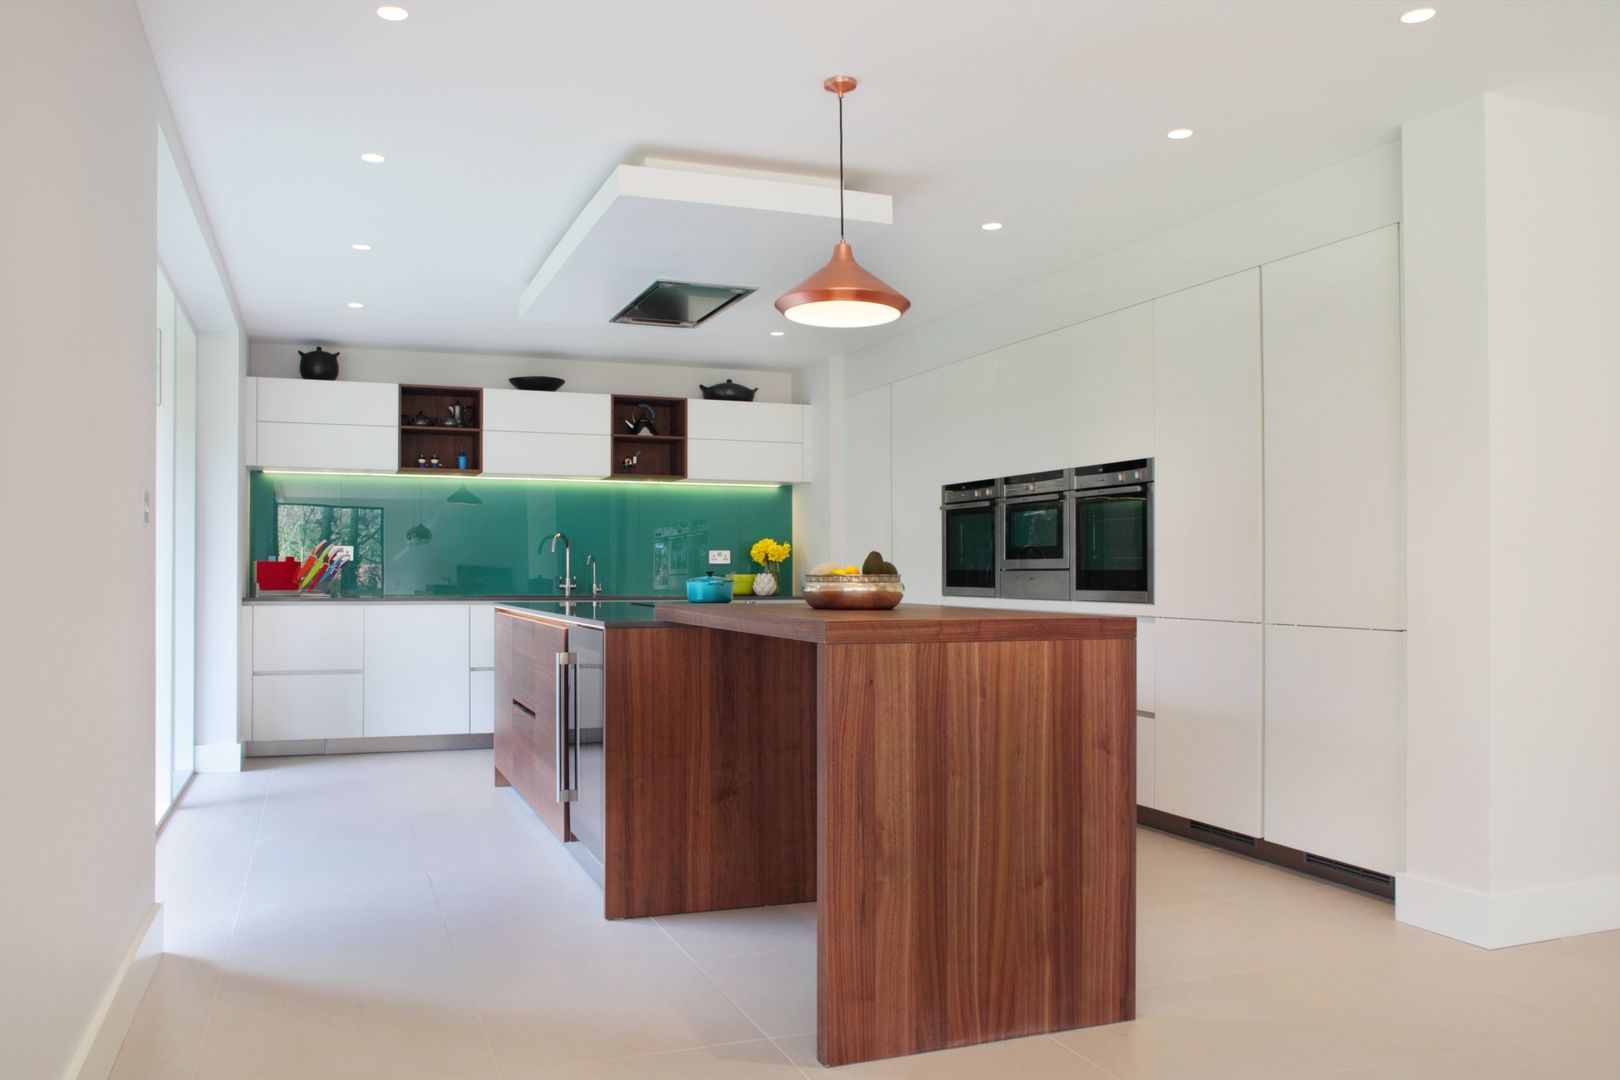 Contemporary Kitchen in Walnut and White Glass in-toto Kitchens Design Studio Marlow Cocinas modernas: Ideas, imágenes y decoración